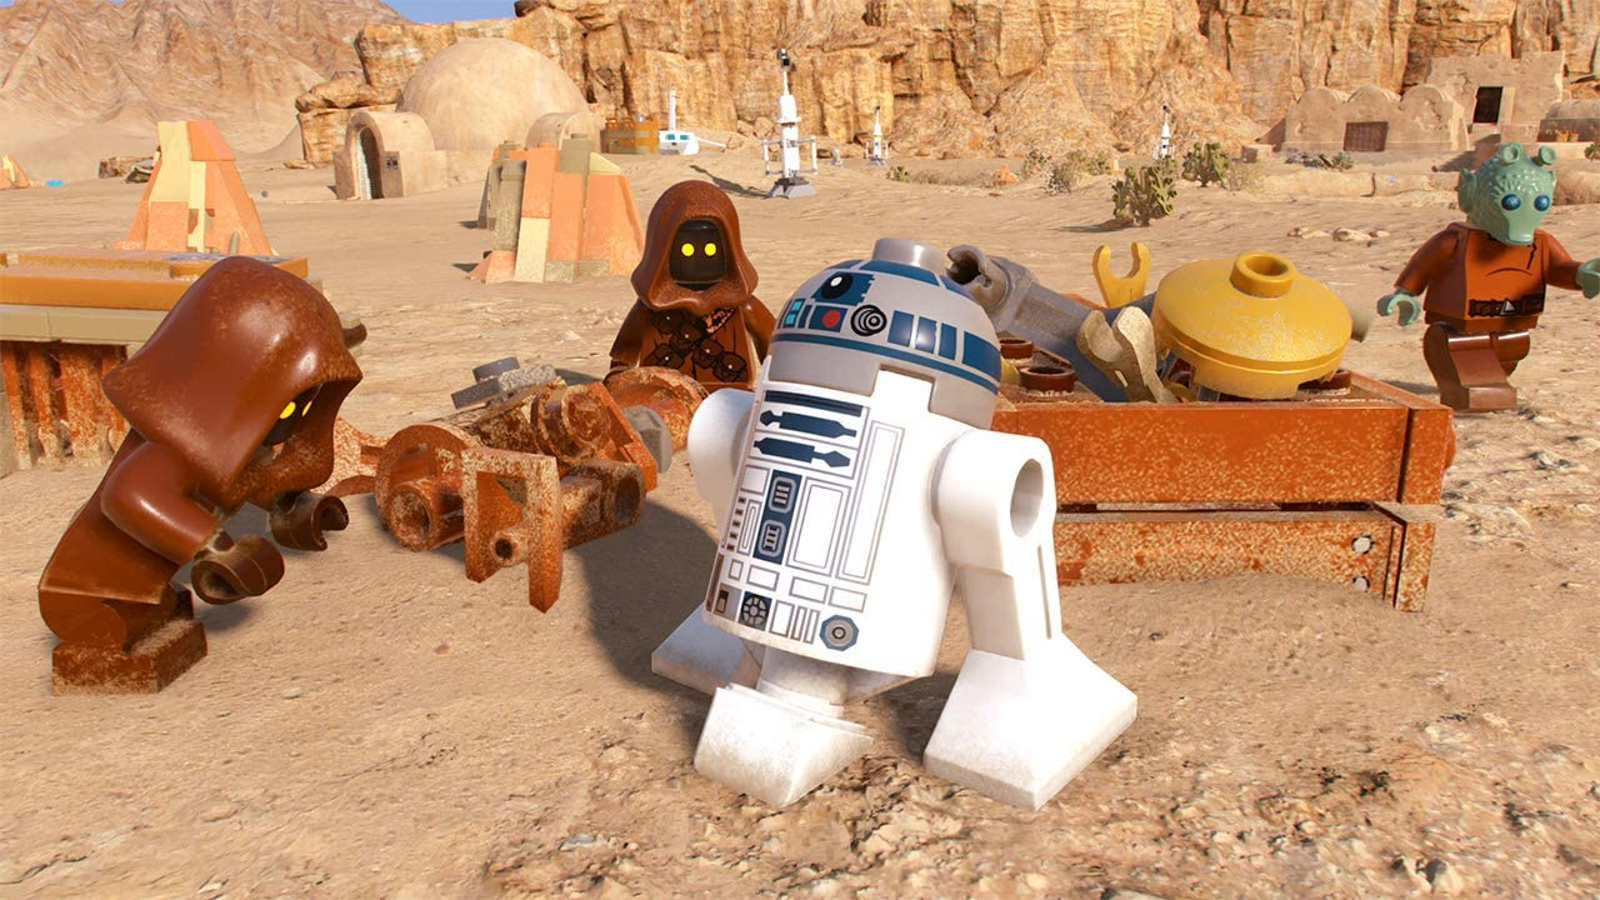 Buy LEGO® Star Wars™: The Skywalker Saga